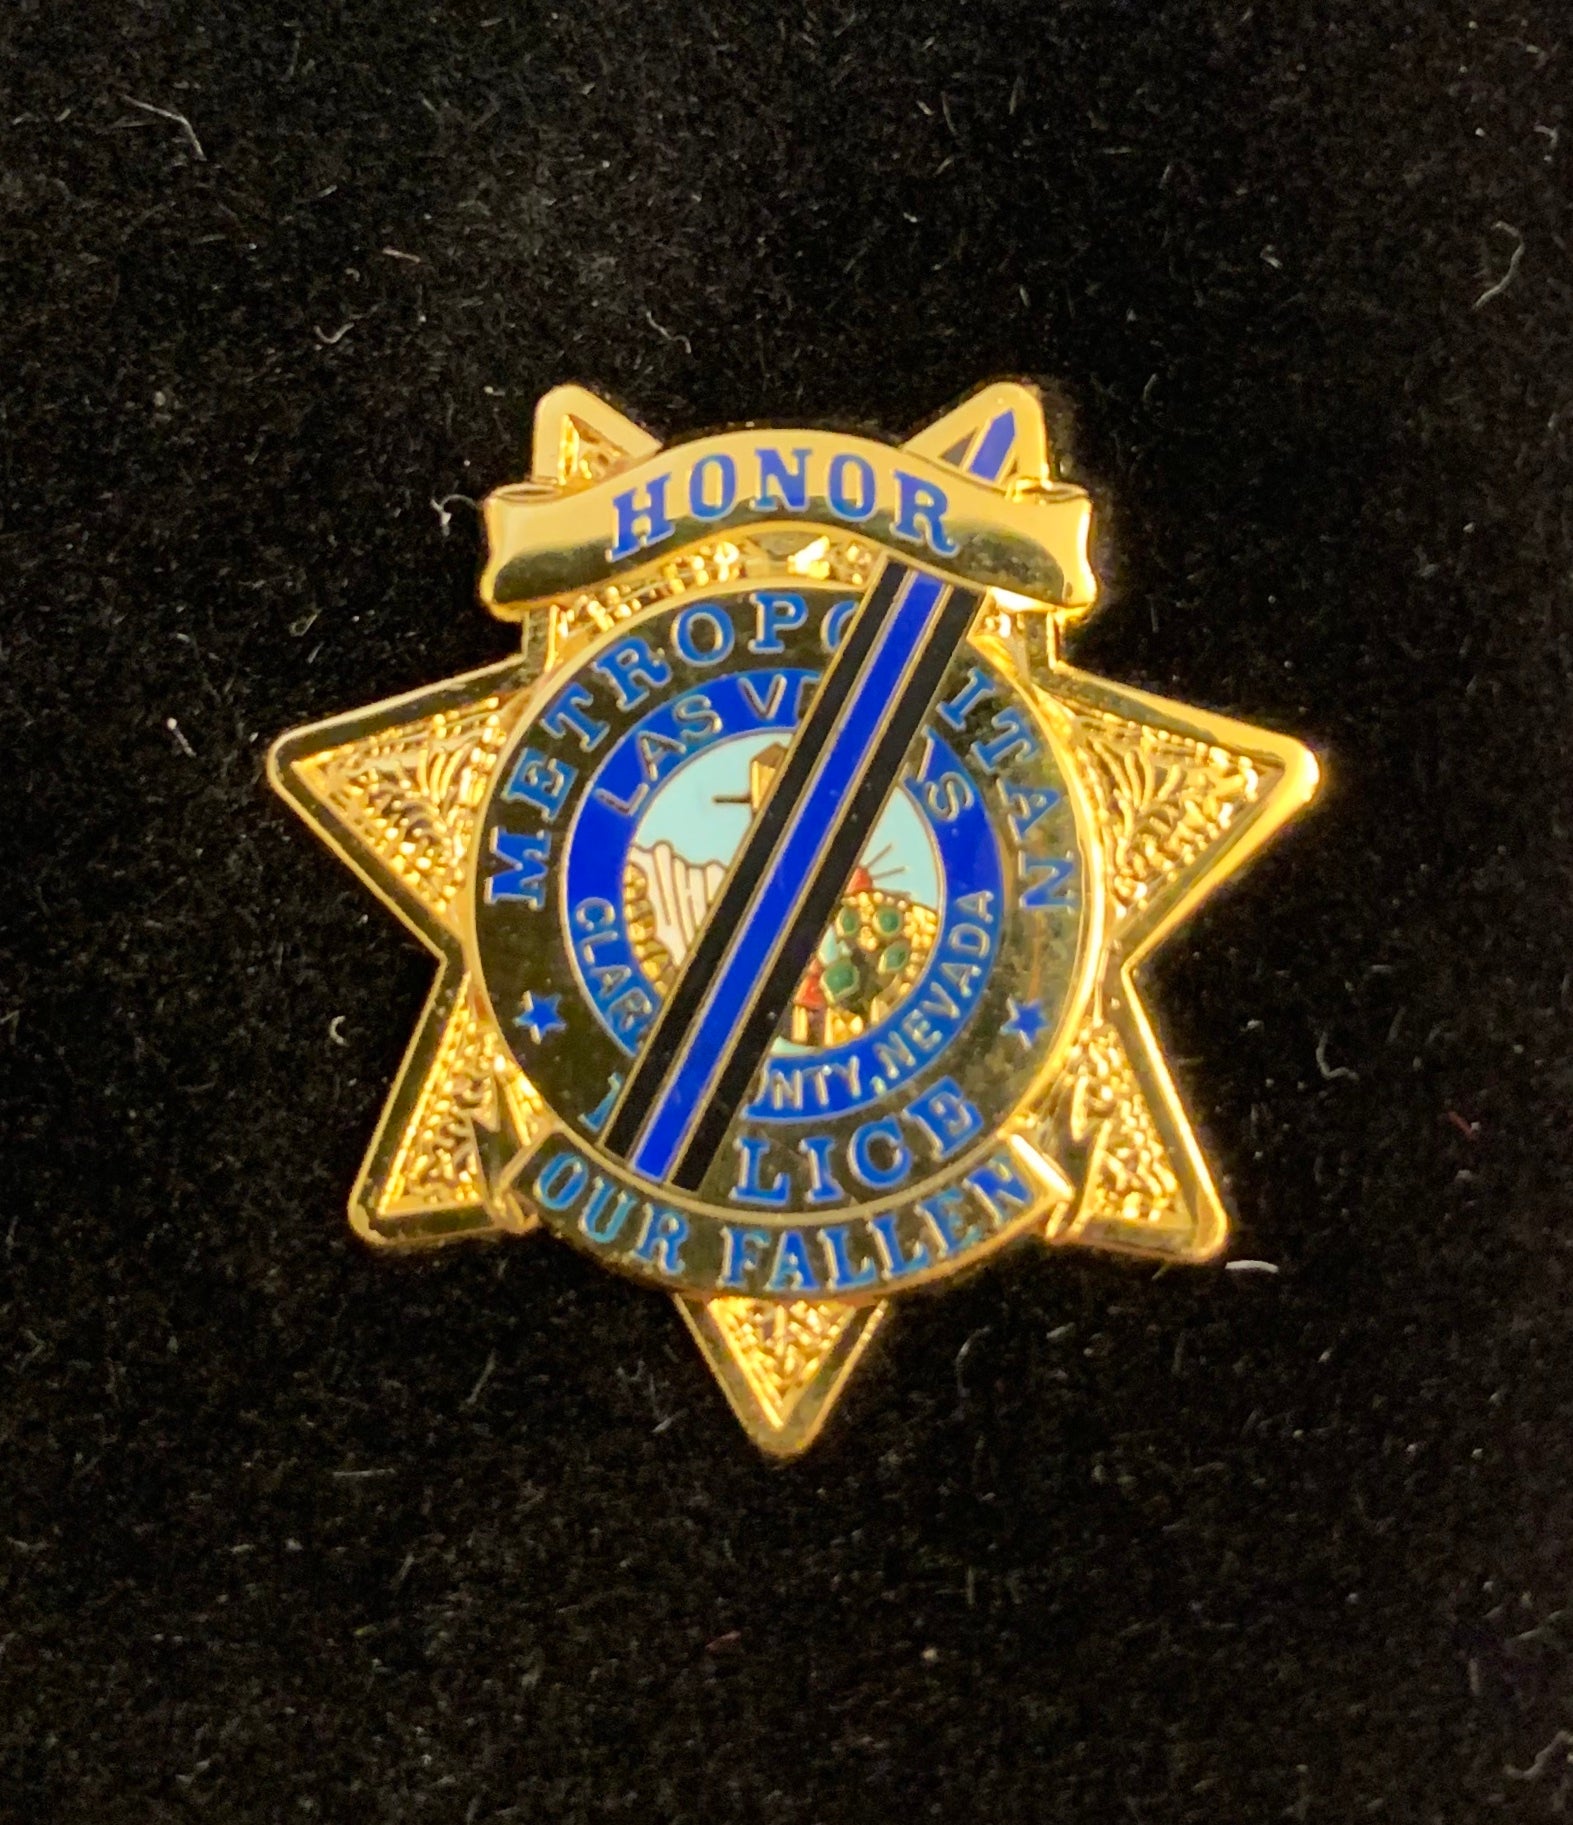 Las Vegas Metropolitan Police Department - L V M P D Badge over